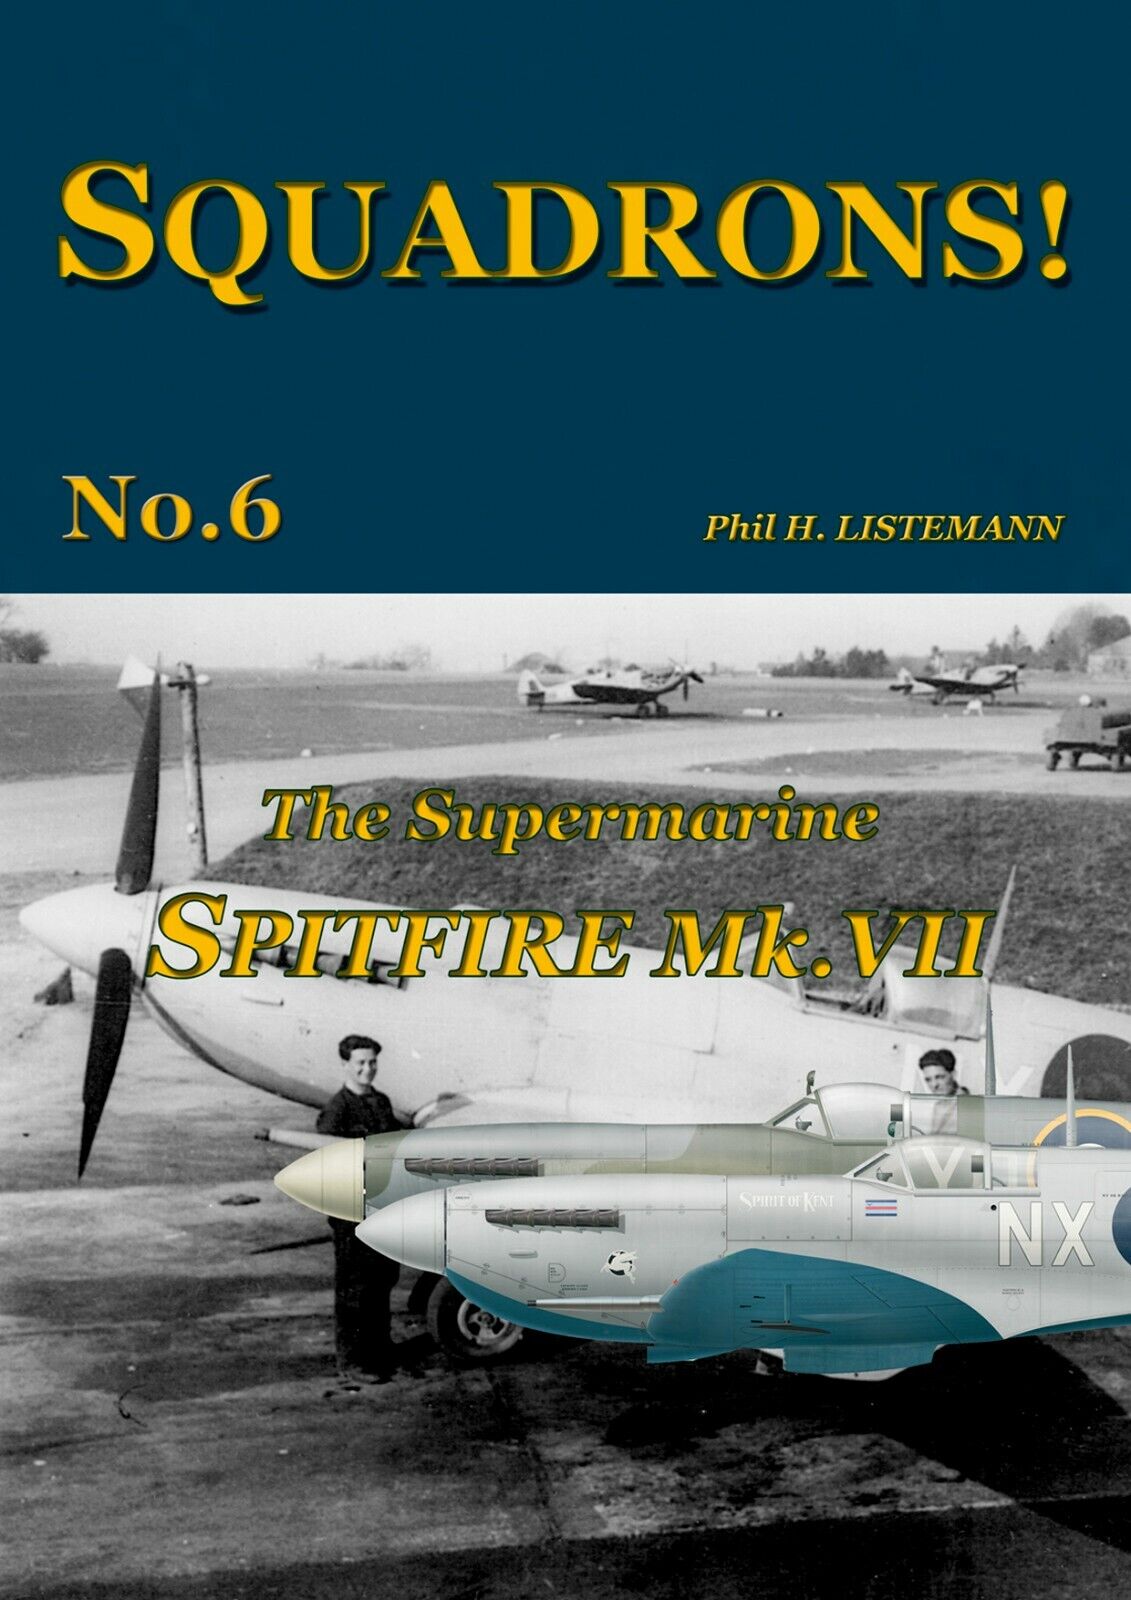 SQUADRONS No. 6 - The Supermarine Spitfire VII (Revised Dec.2018)